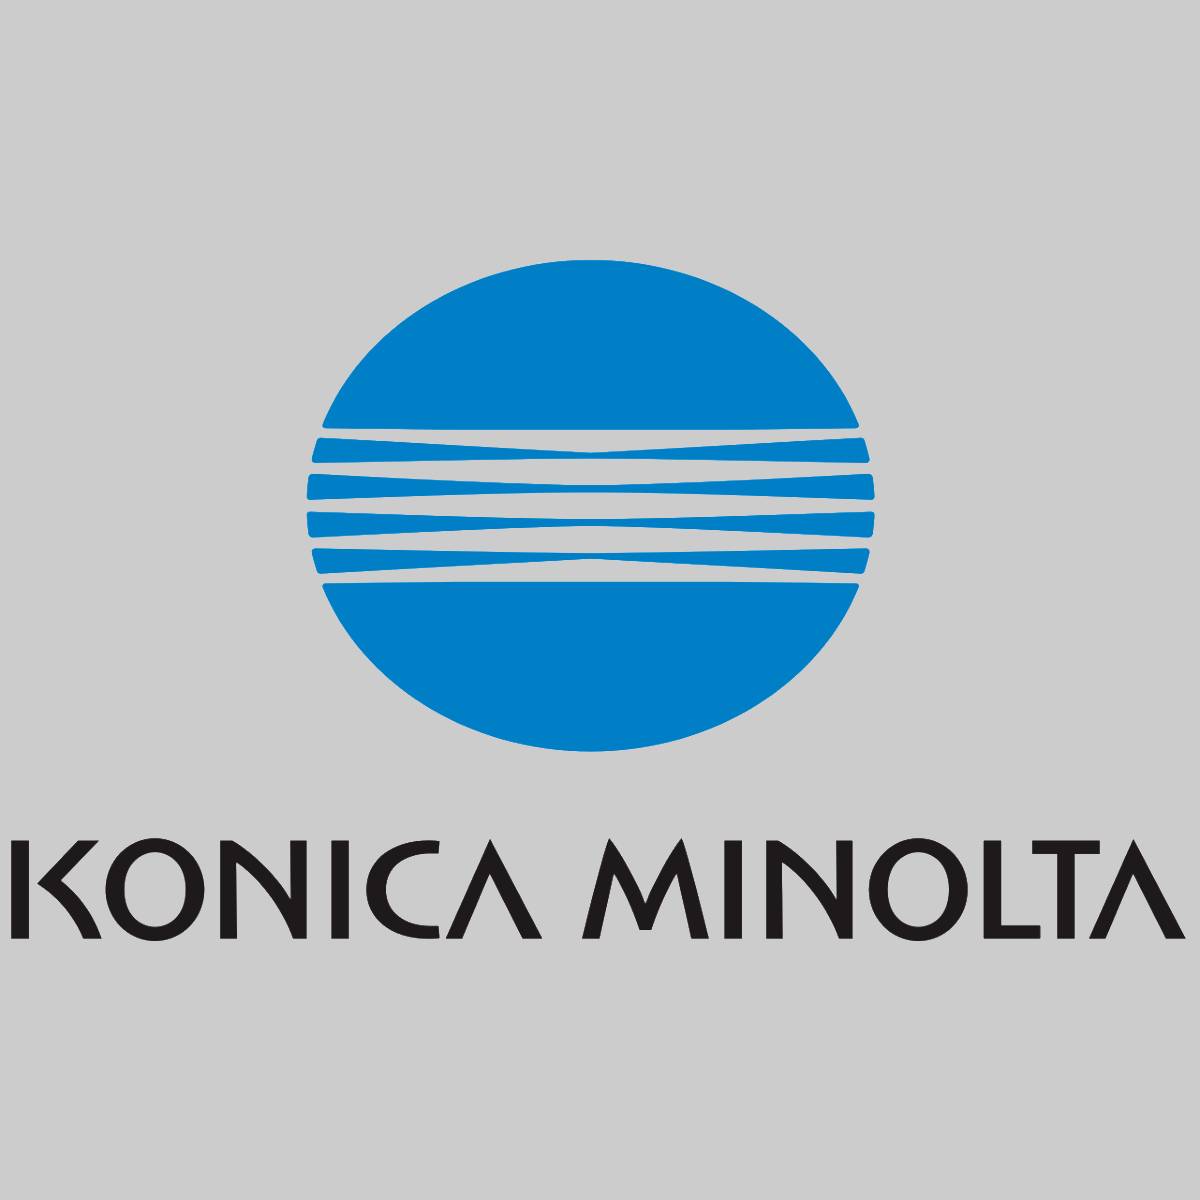 Konica Minolta IUP23M Magenta Imaging Unit A7330EH voor Bizhub C 3100 3110 NIEUW OV